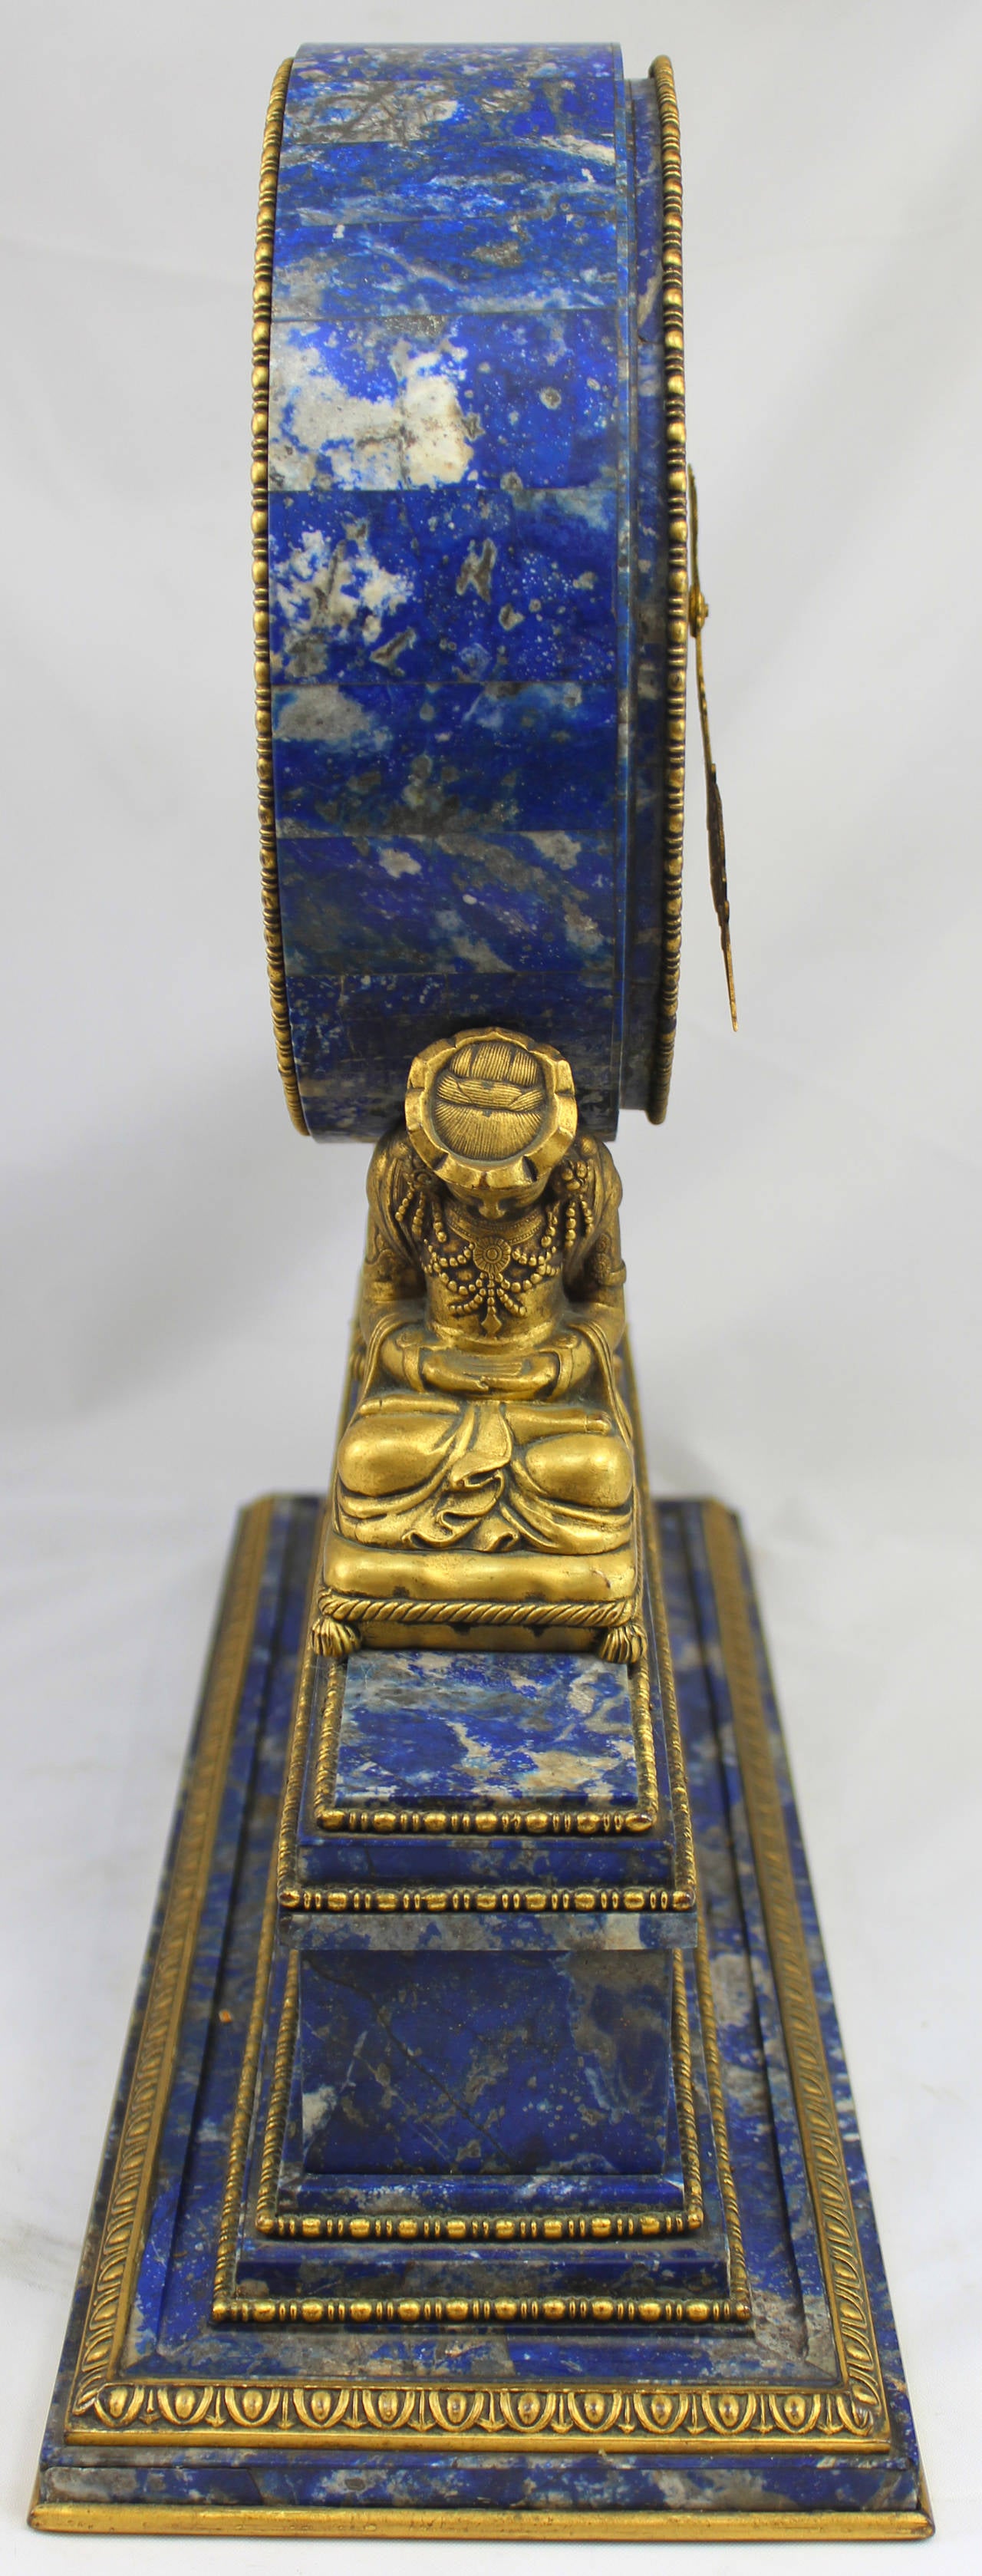 Polished Brazilian Lapis Lazuli Mantel Clock in Chinese Motif, Signed Caldwell